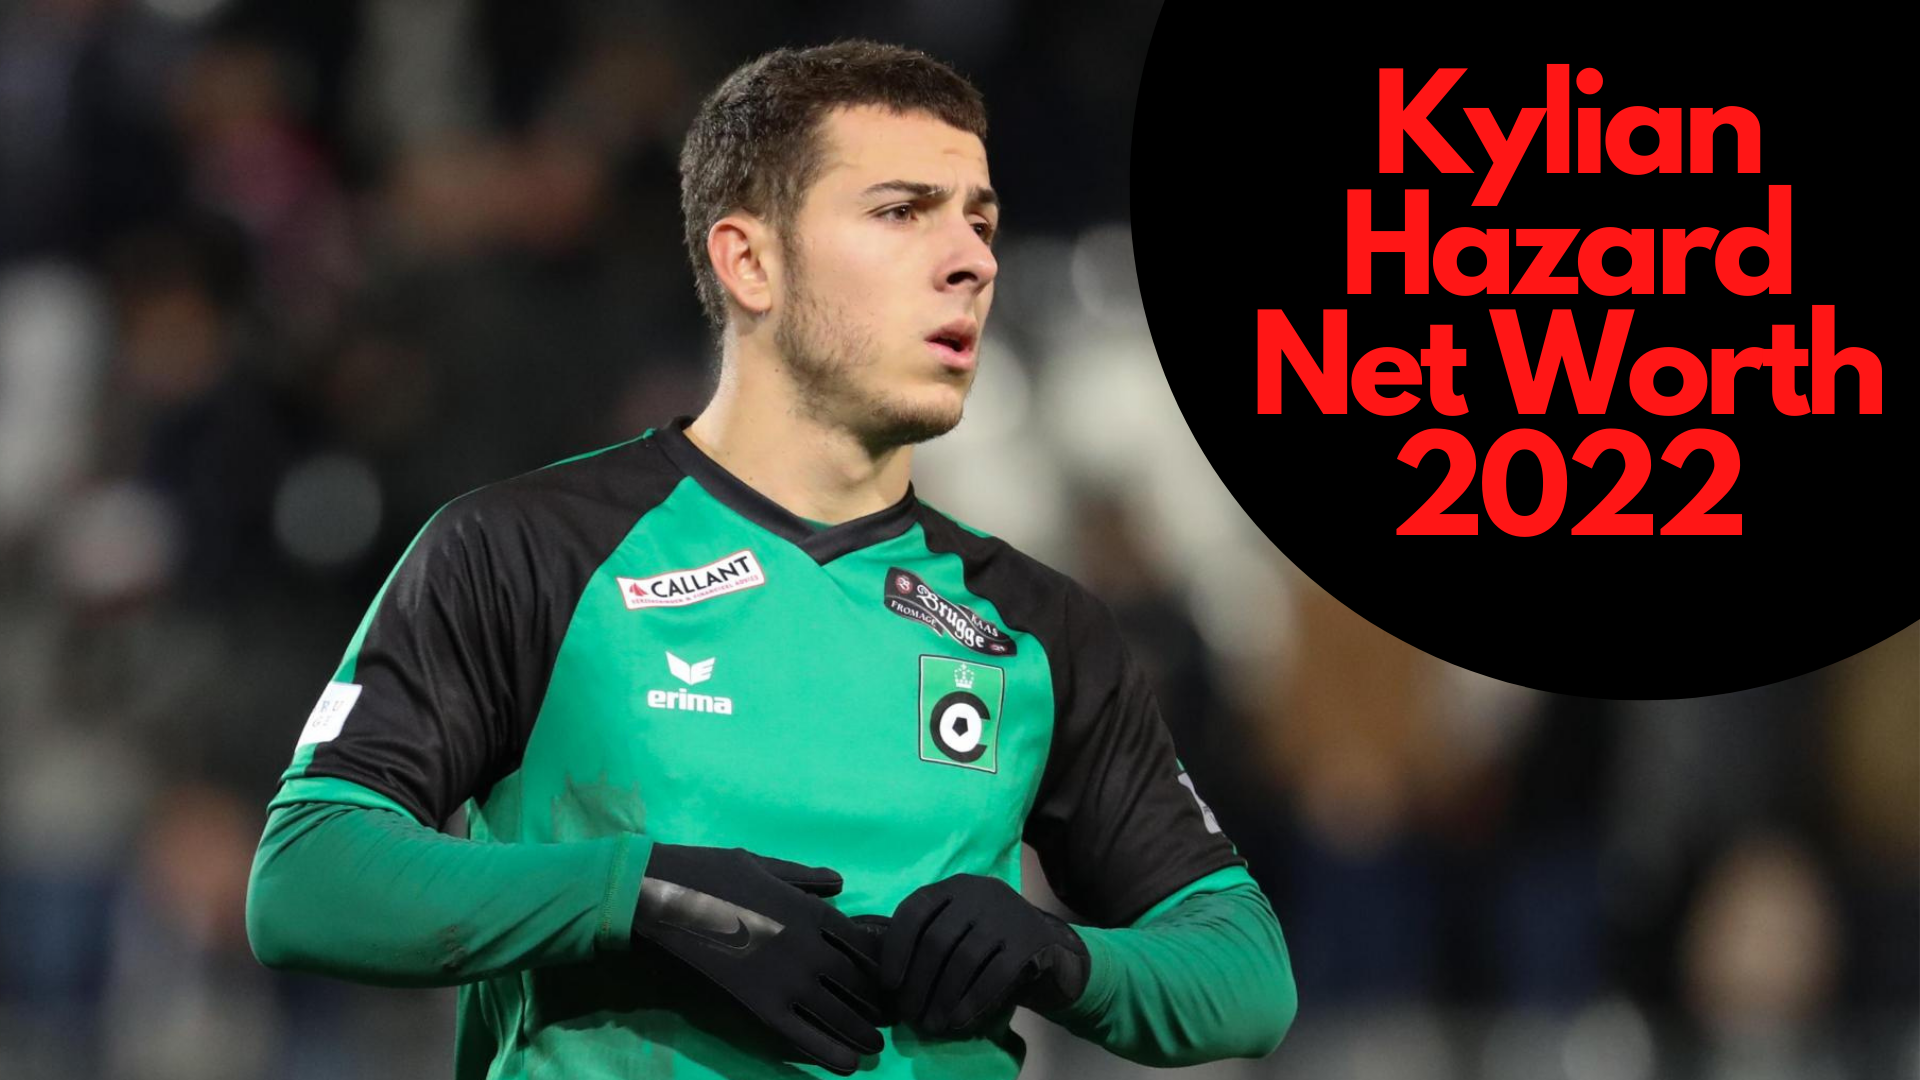 Kylian Hazard wearing green and black shirt with words Kylian Hazard Net Worth 2022